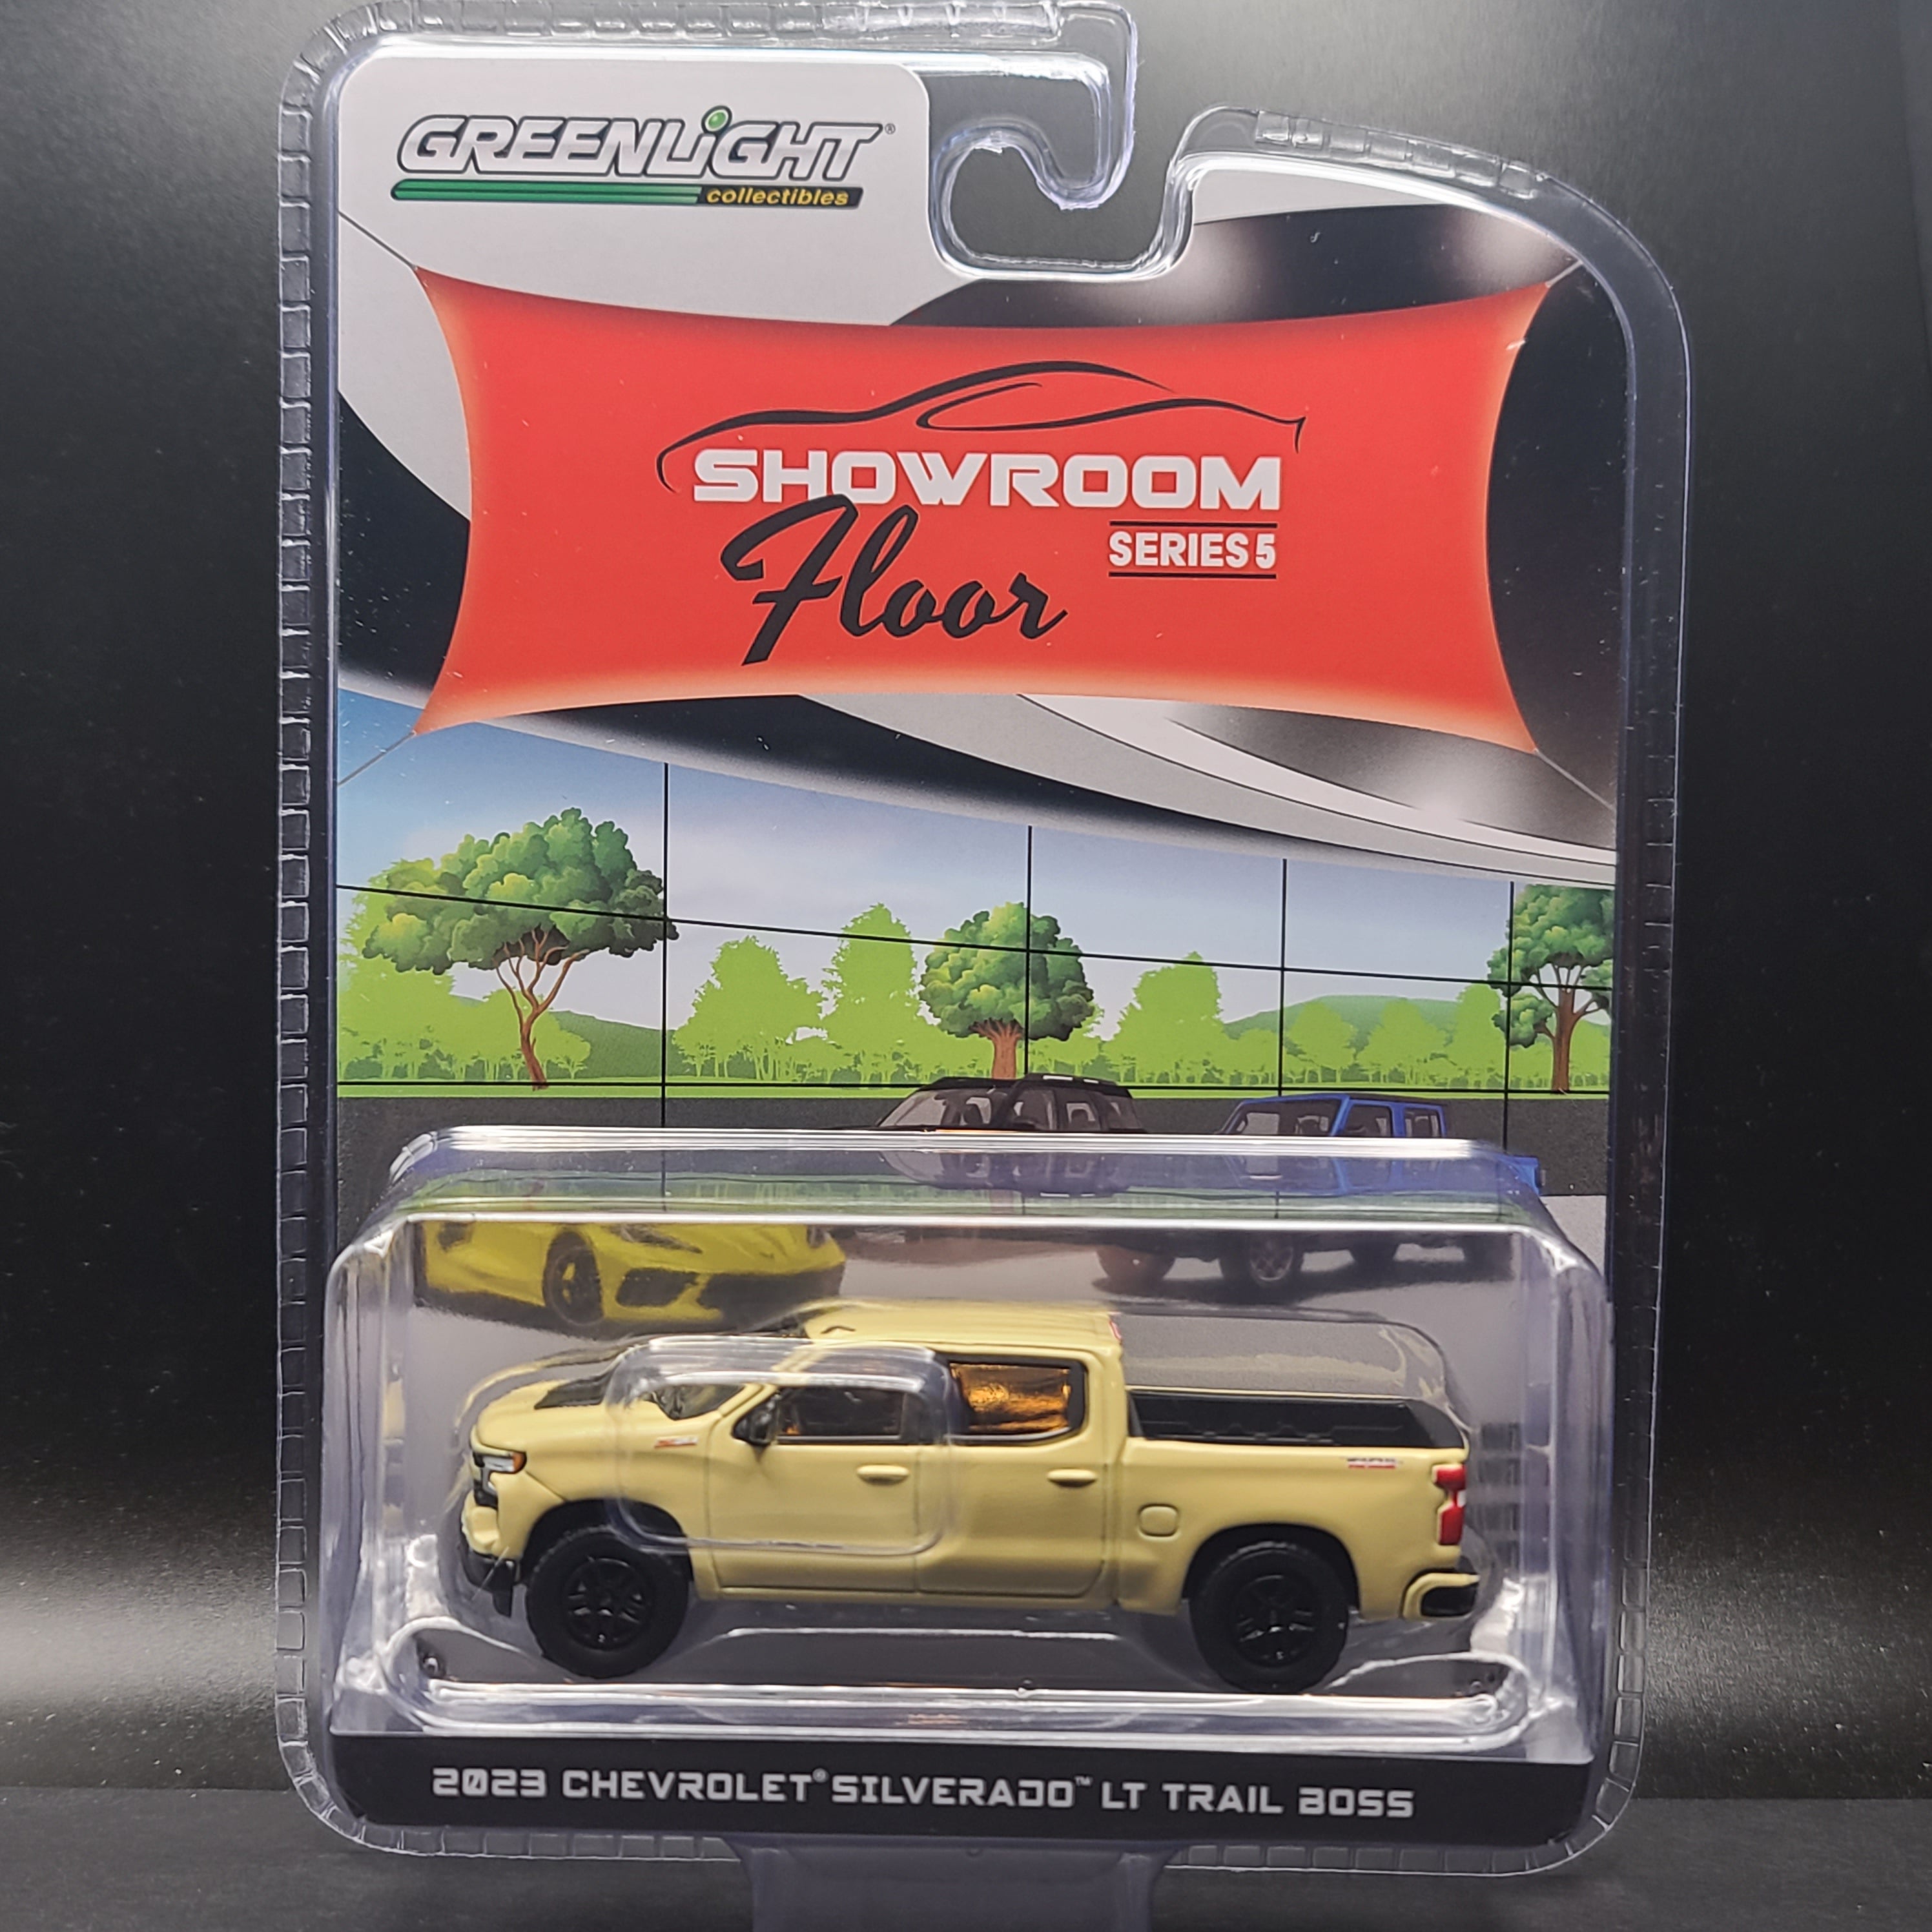 Greenlight '23 Chevrolet Silverado LT Trail Boss Pick-up Truck - 1:64 scale (2024 Showroom Floor Series 5)